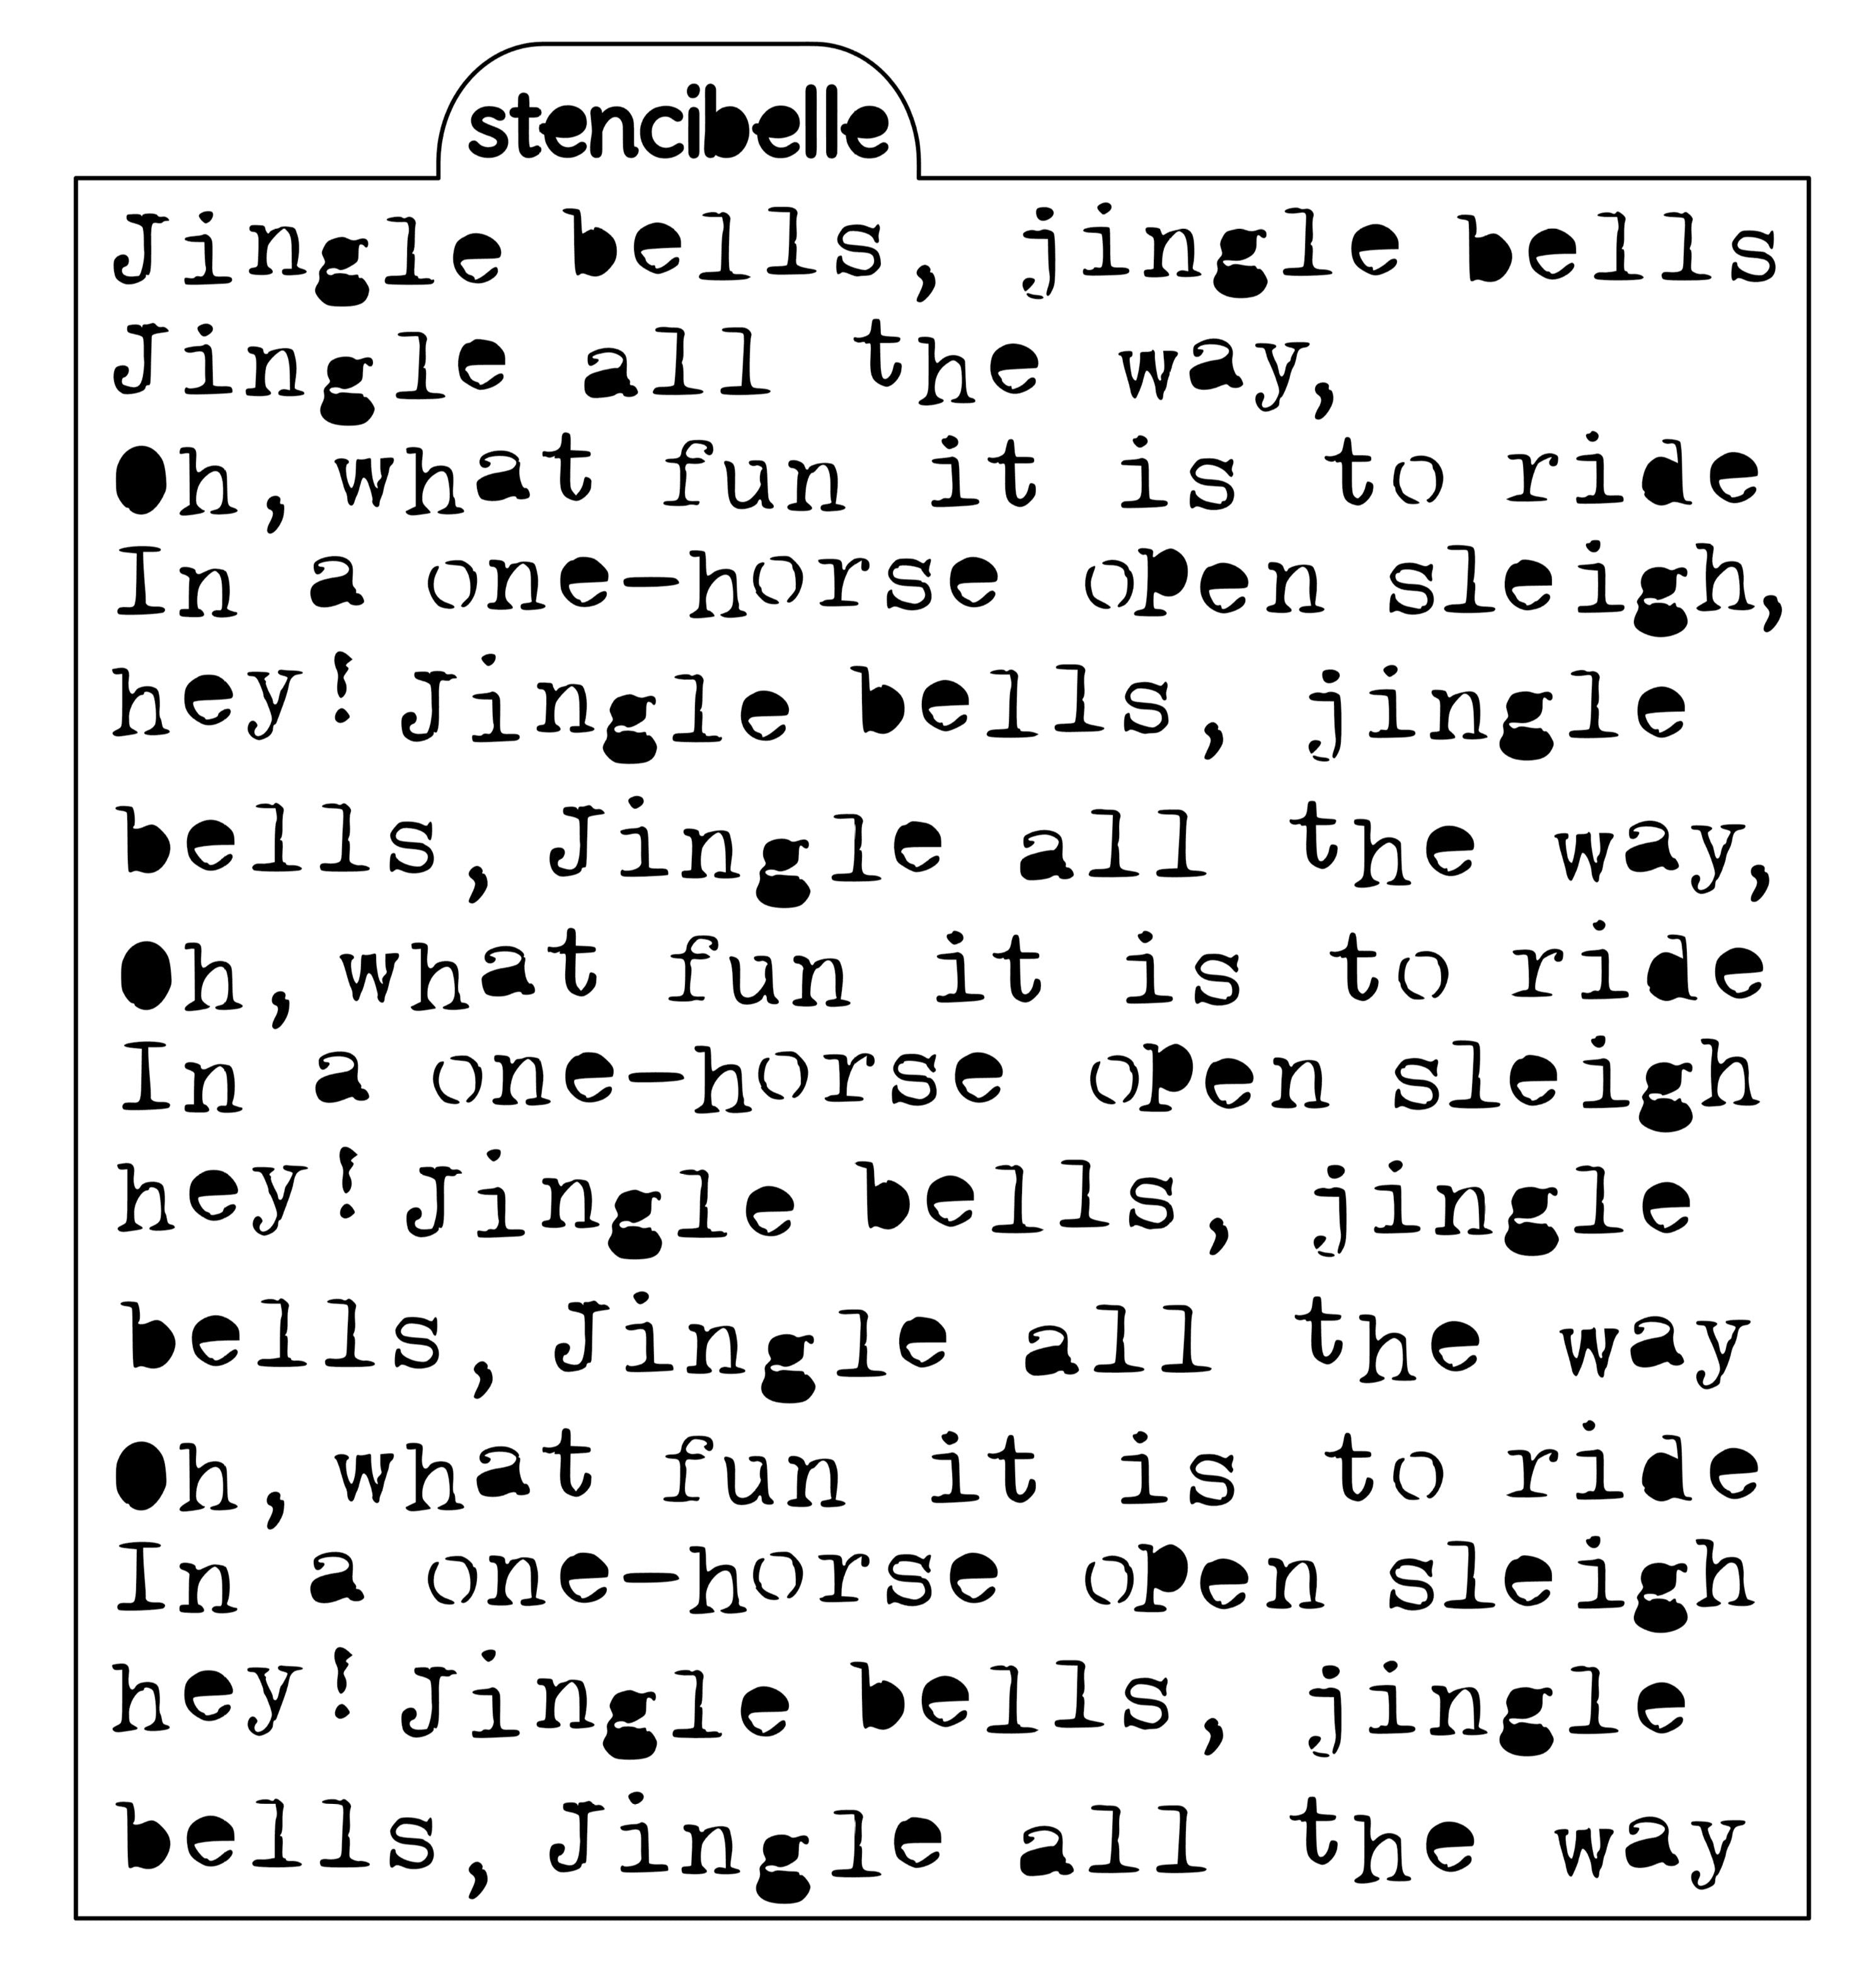 Jingle bells lyrics